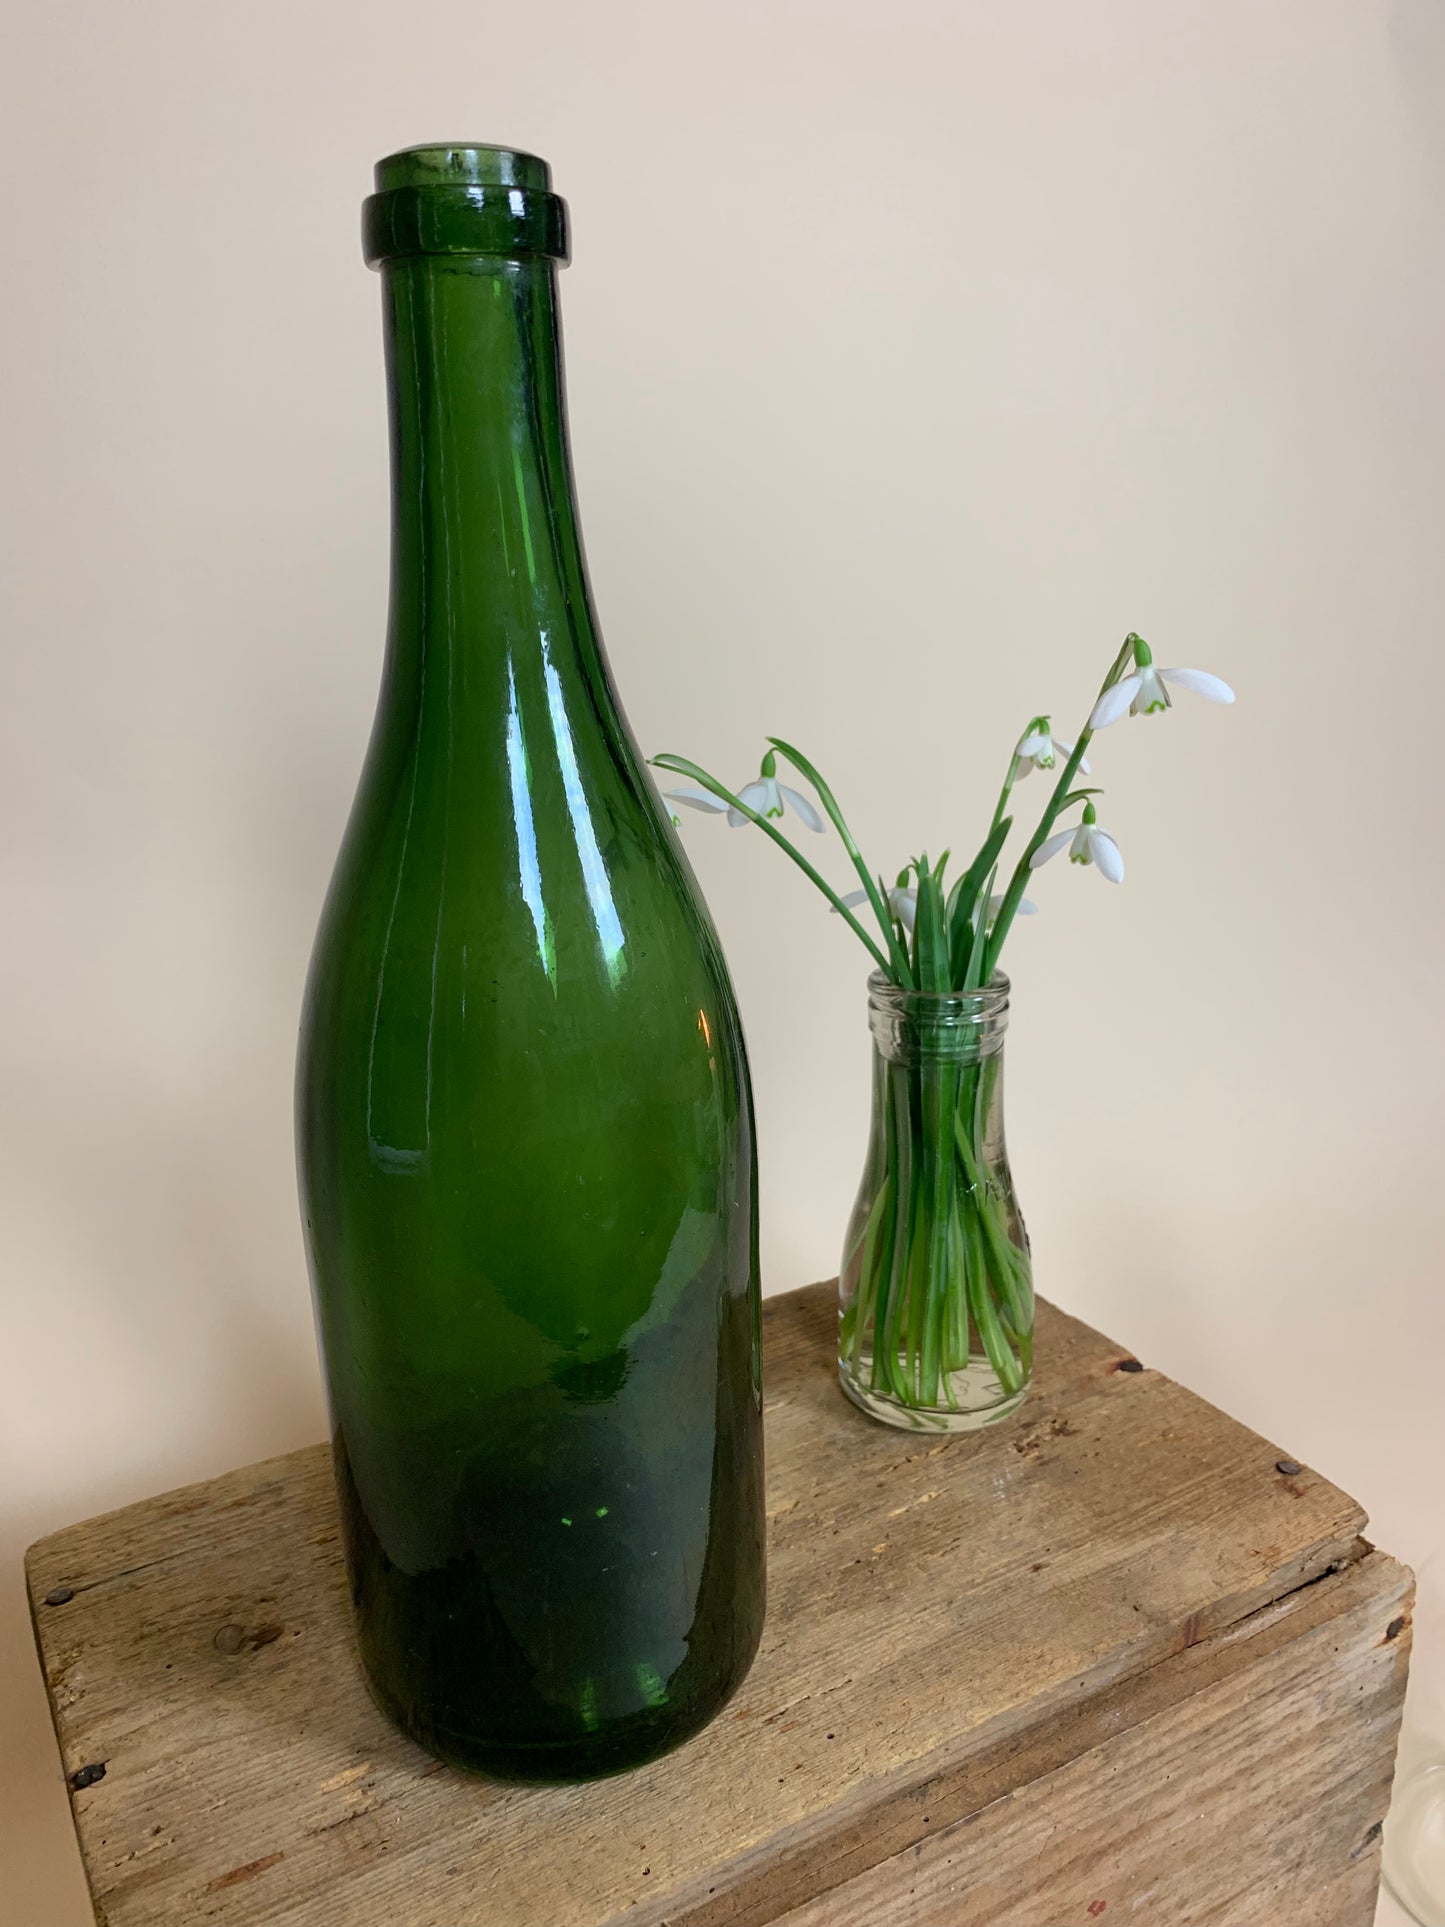 Grüne Flasche